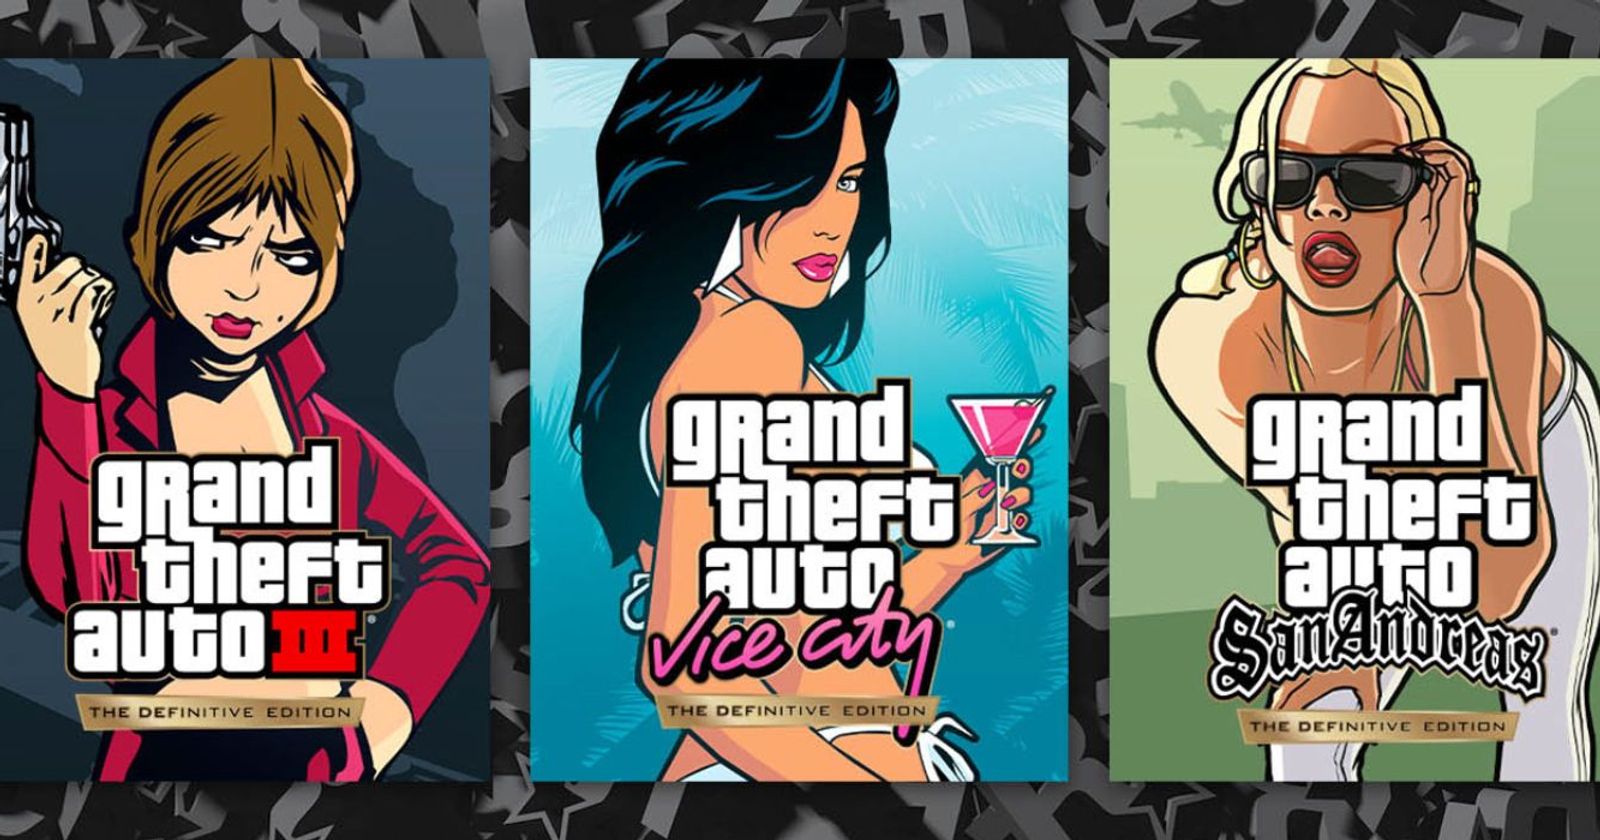 Gta trilogy definitive купить. GTA Definitive Edition. Grand Theft auto: the Trilogy. ГТА трилогия Дефинитив эдишн. GTA Trilogy Definitive Edition обложка.